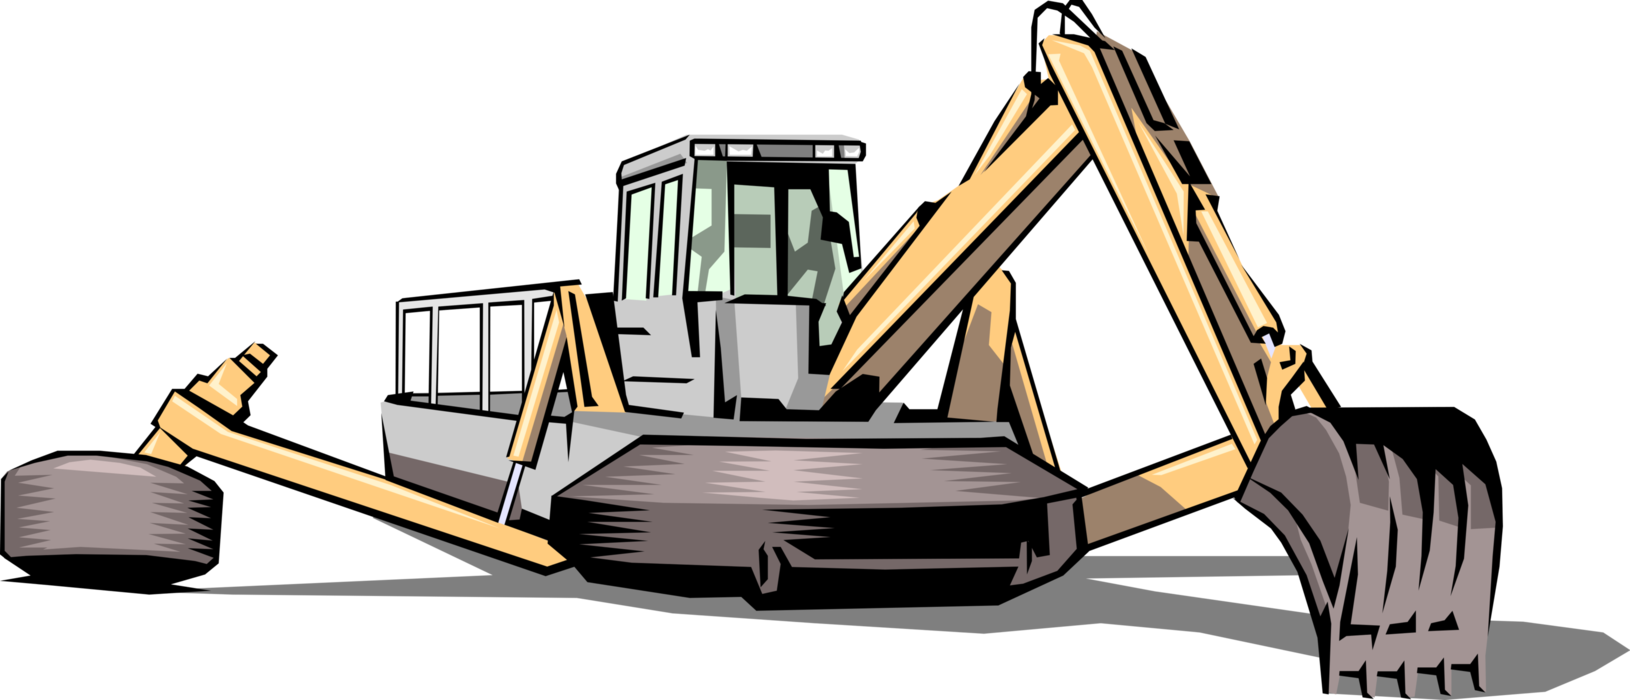 Vector Illustration of Construction Industry Heavy Equipment Backhoe Excavator Digger